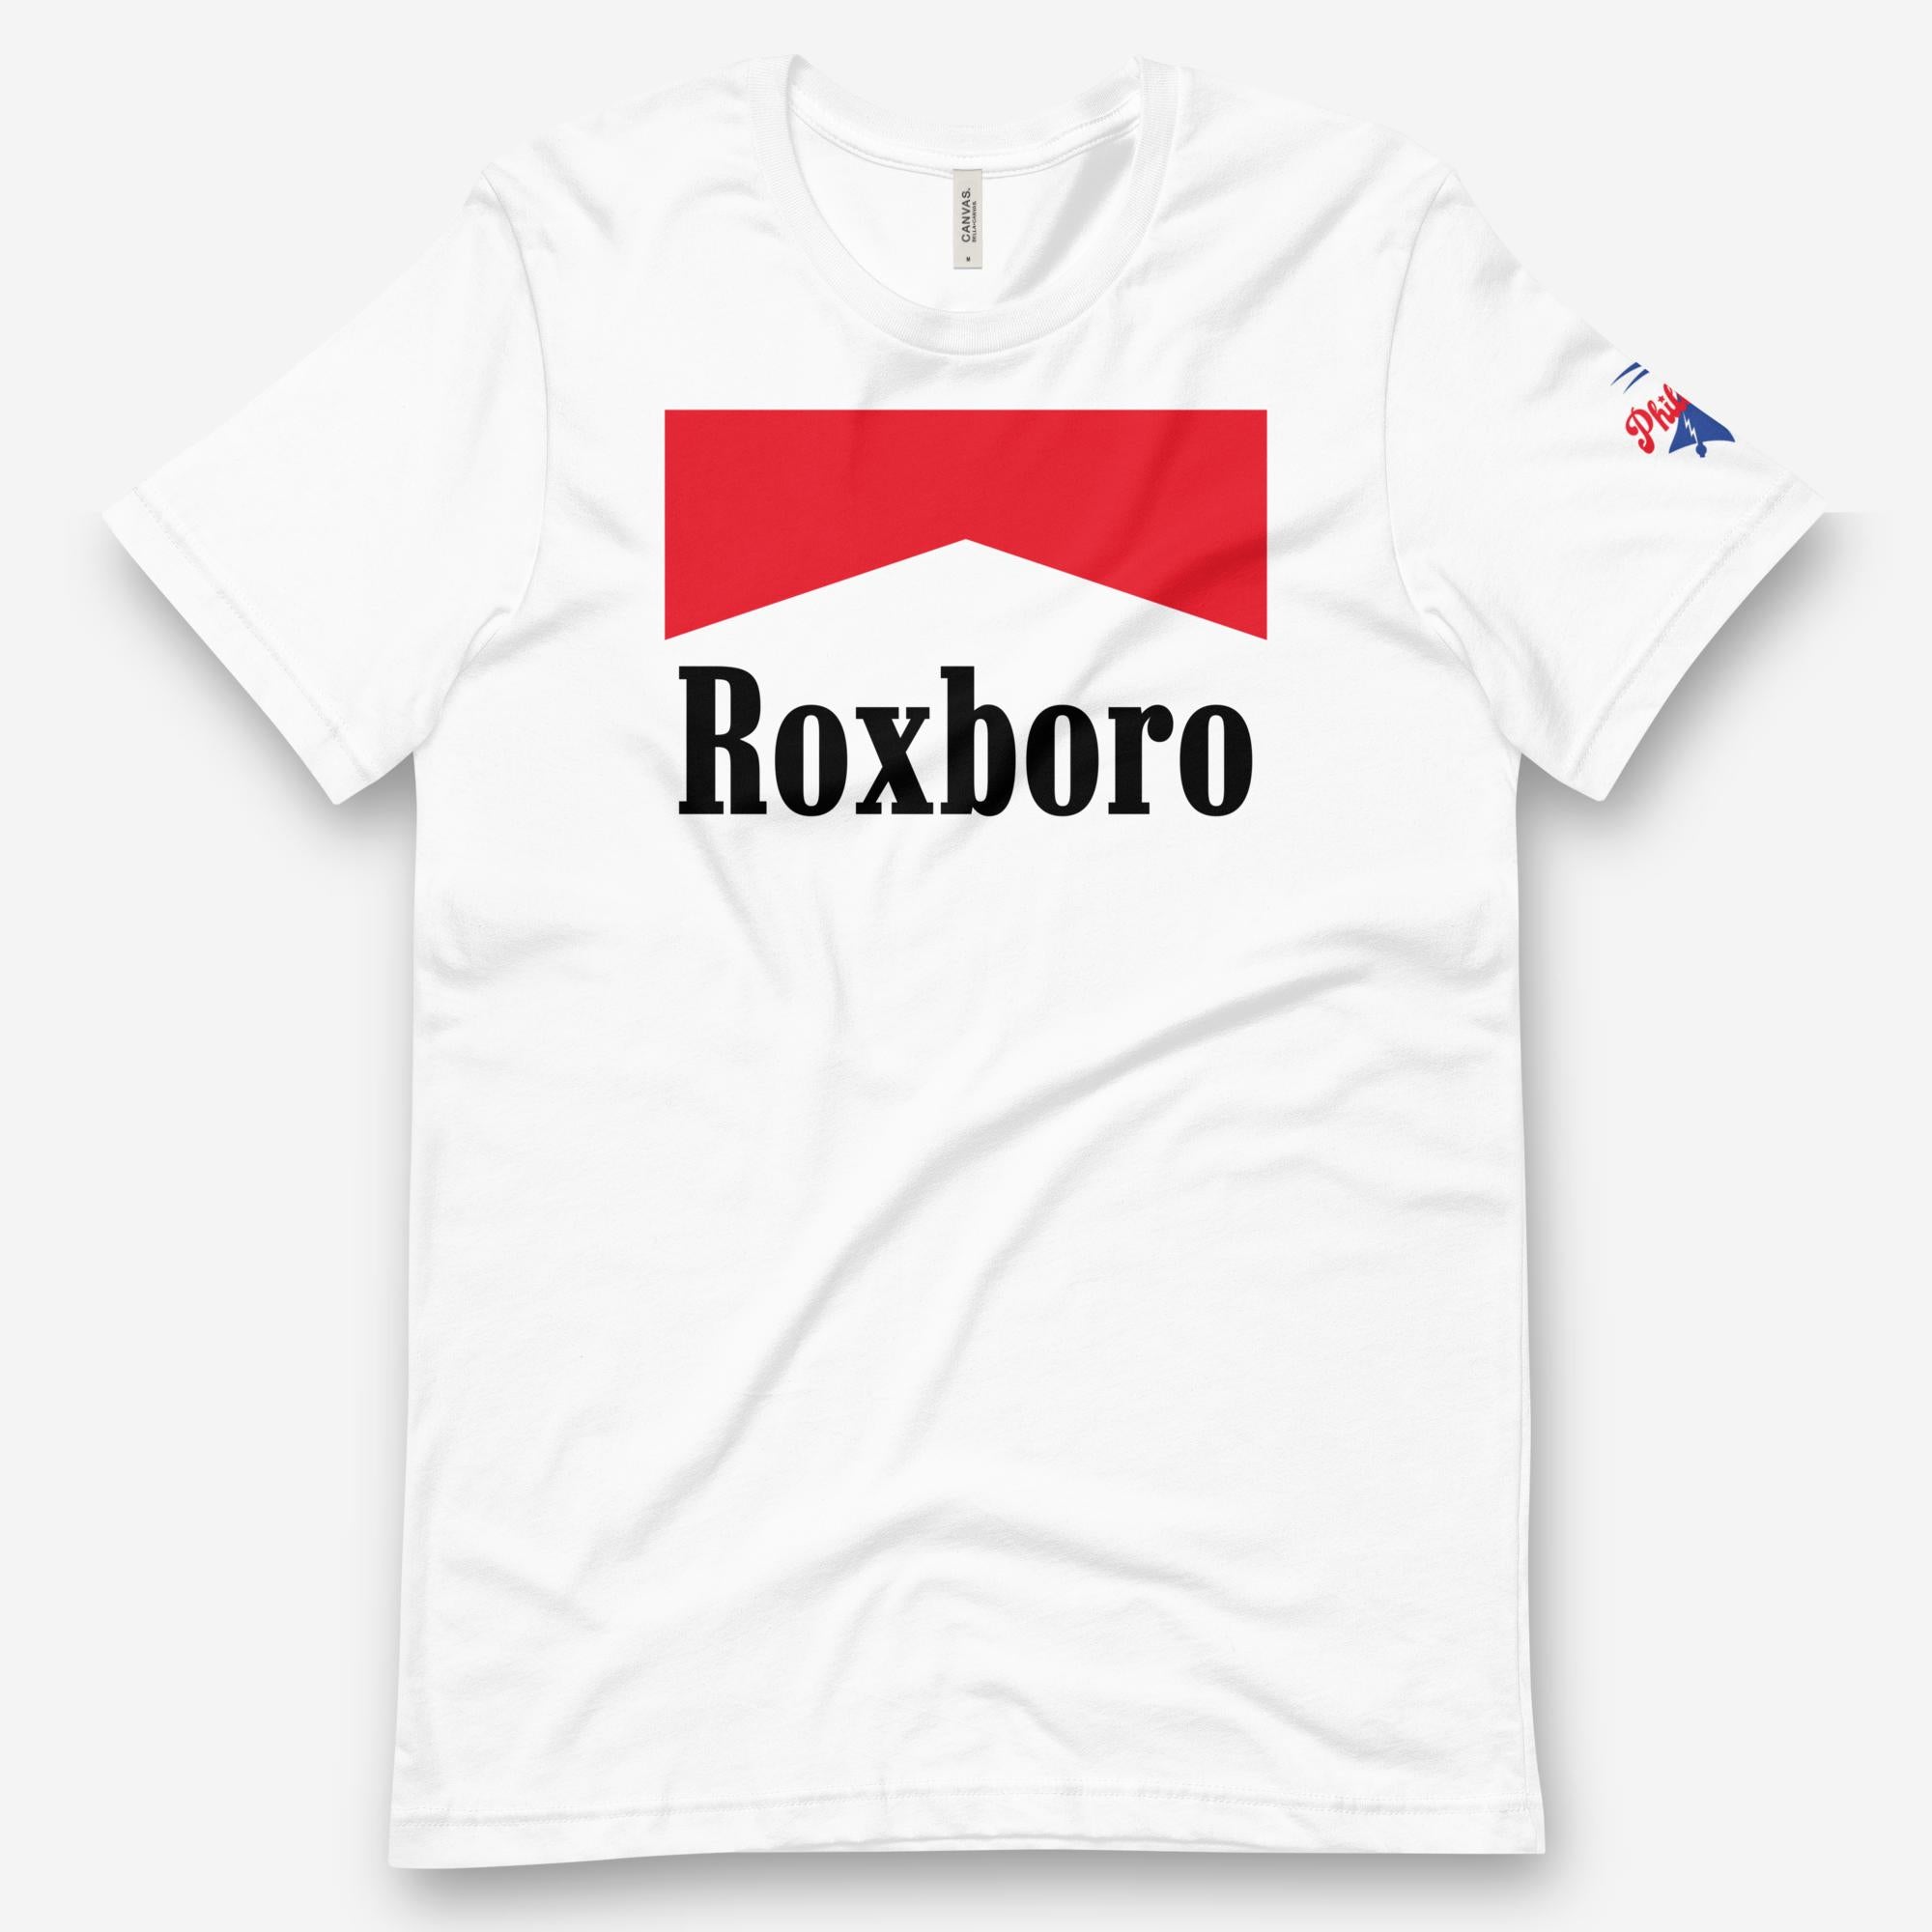 "Roxboro Smokes" Tee